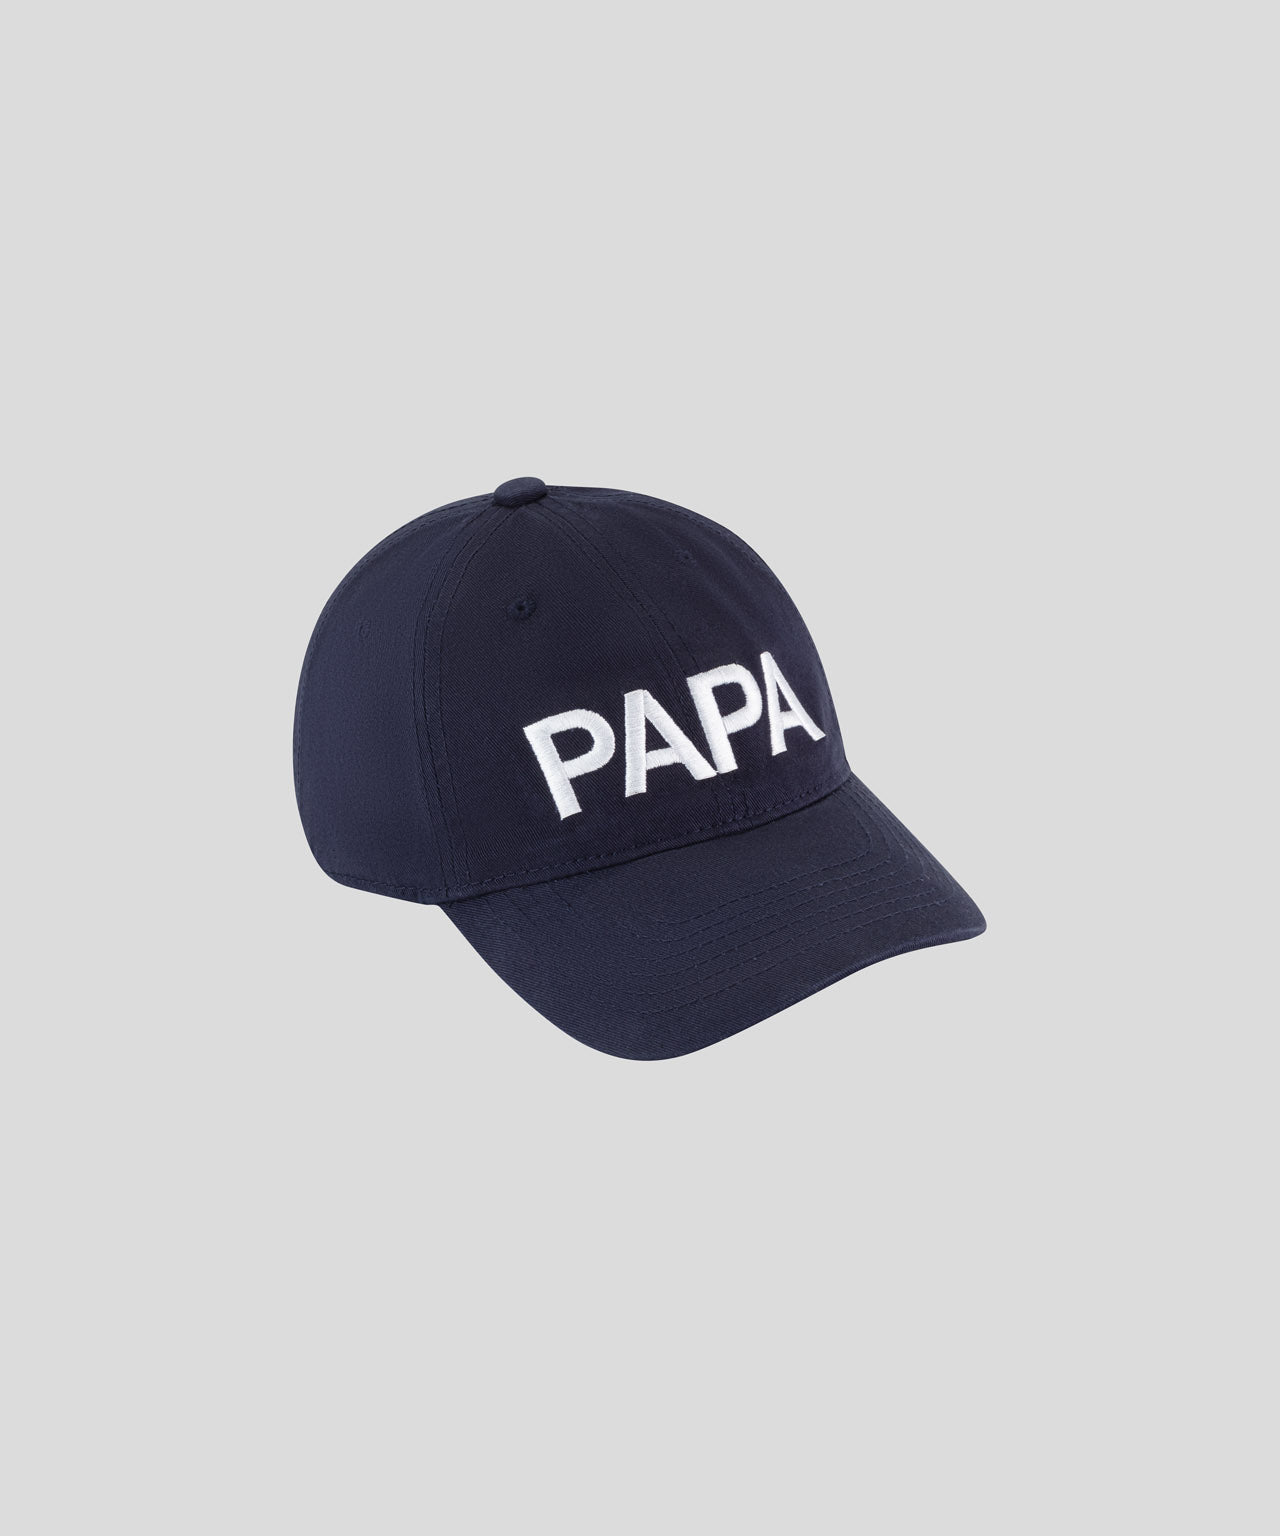 Coach Cap PAPA: Navy